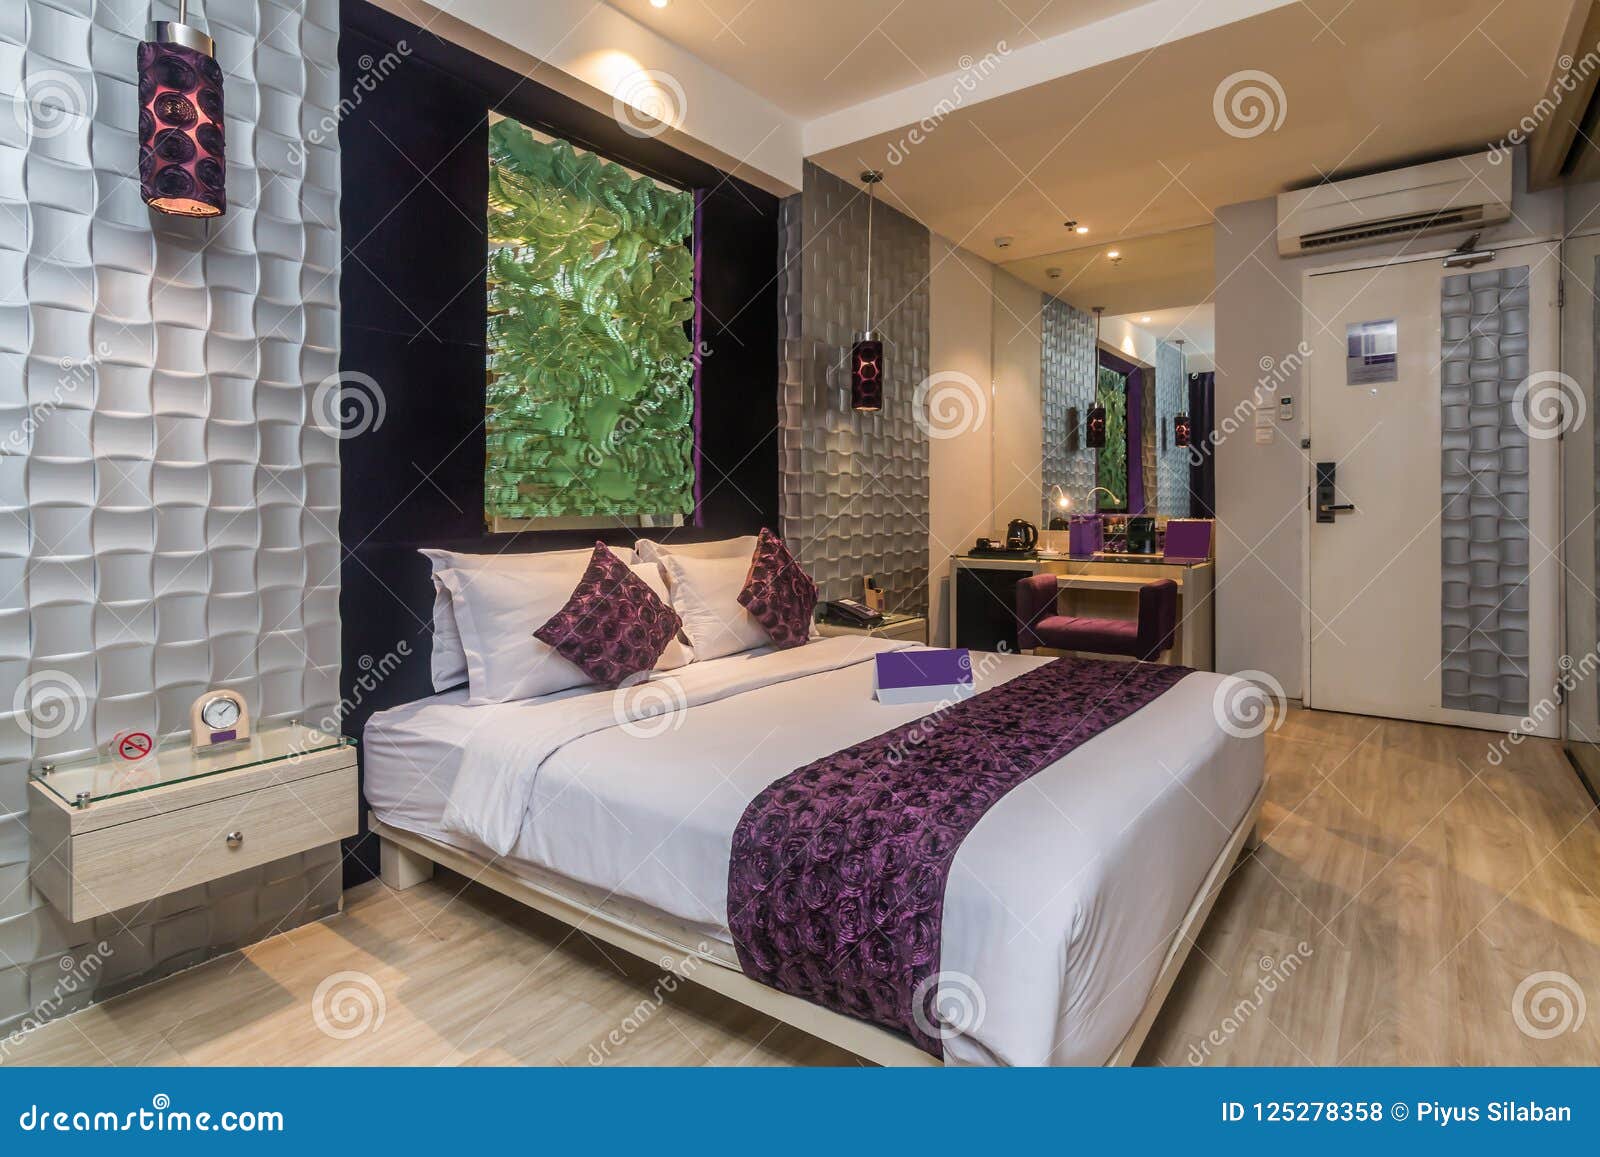 Luxury Hotel Bedroom Stock Photo Image Of Ceiling Mirror 125278358